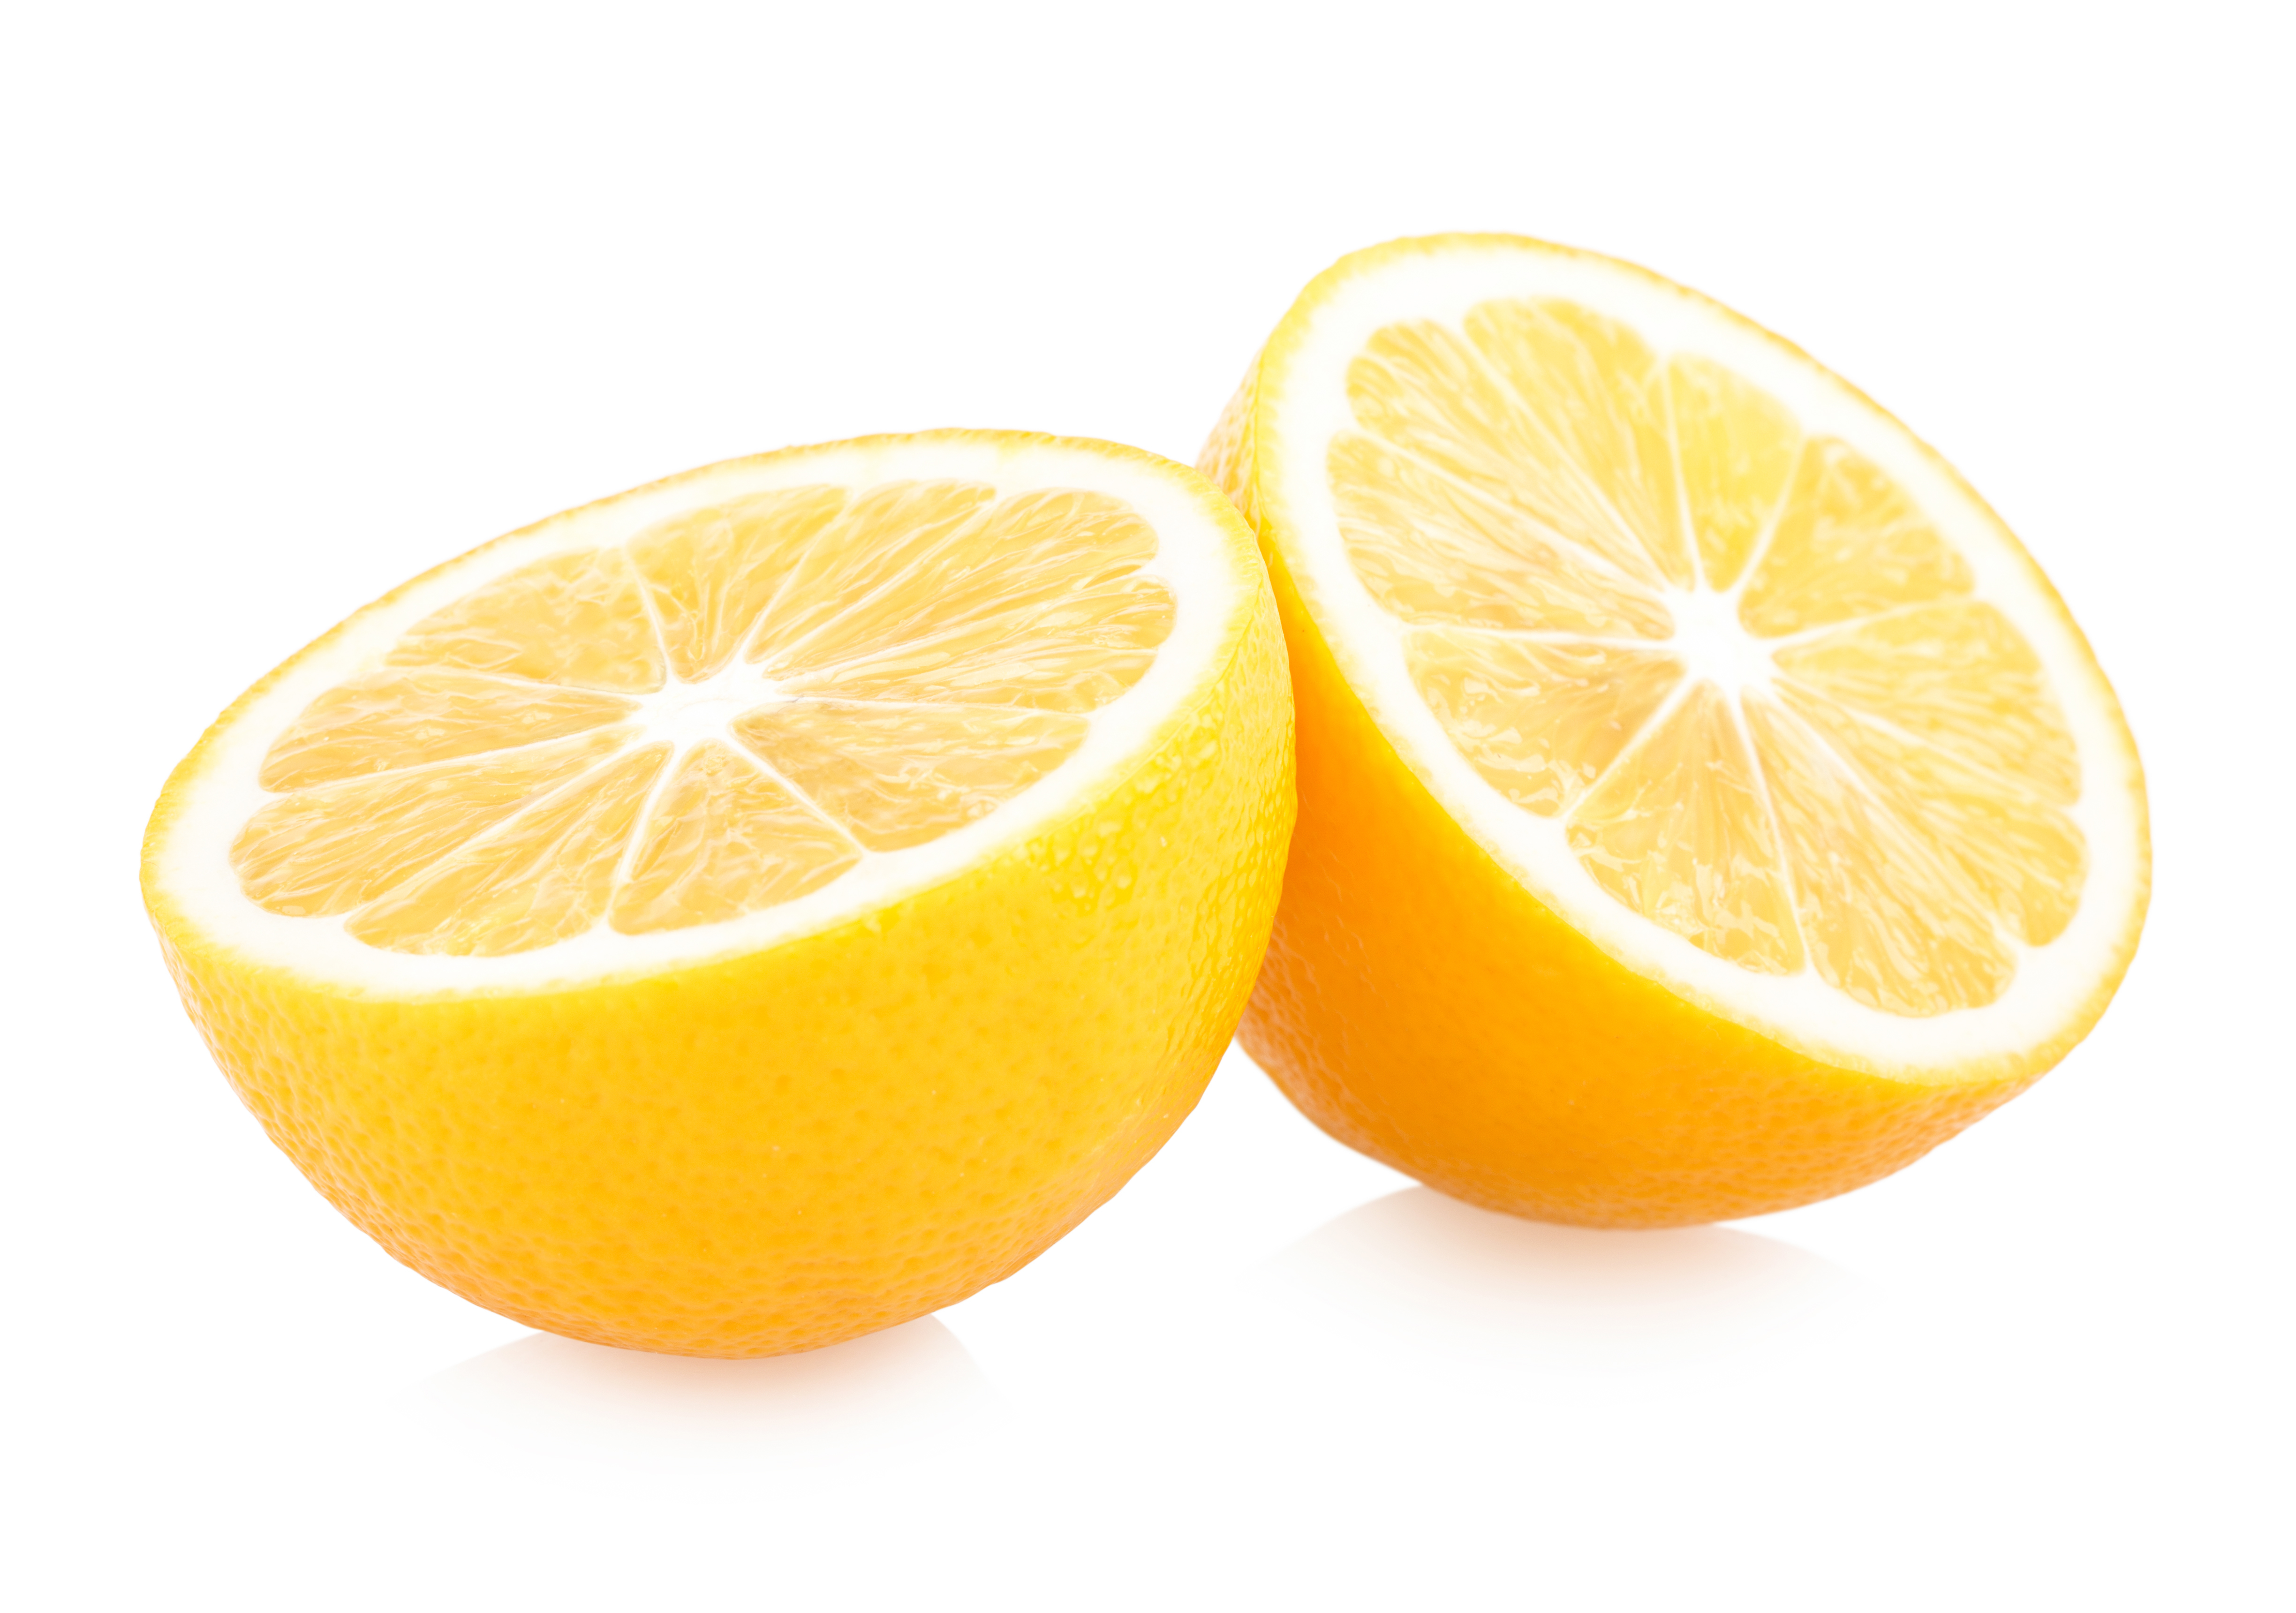 Lemon cut in half photo